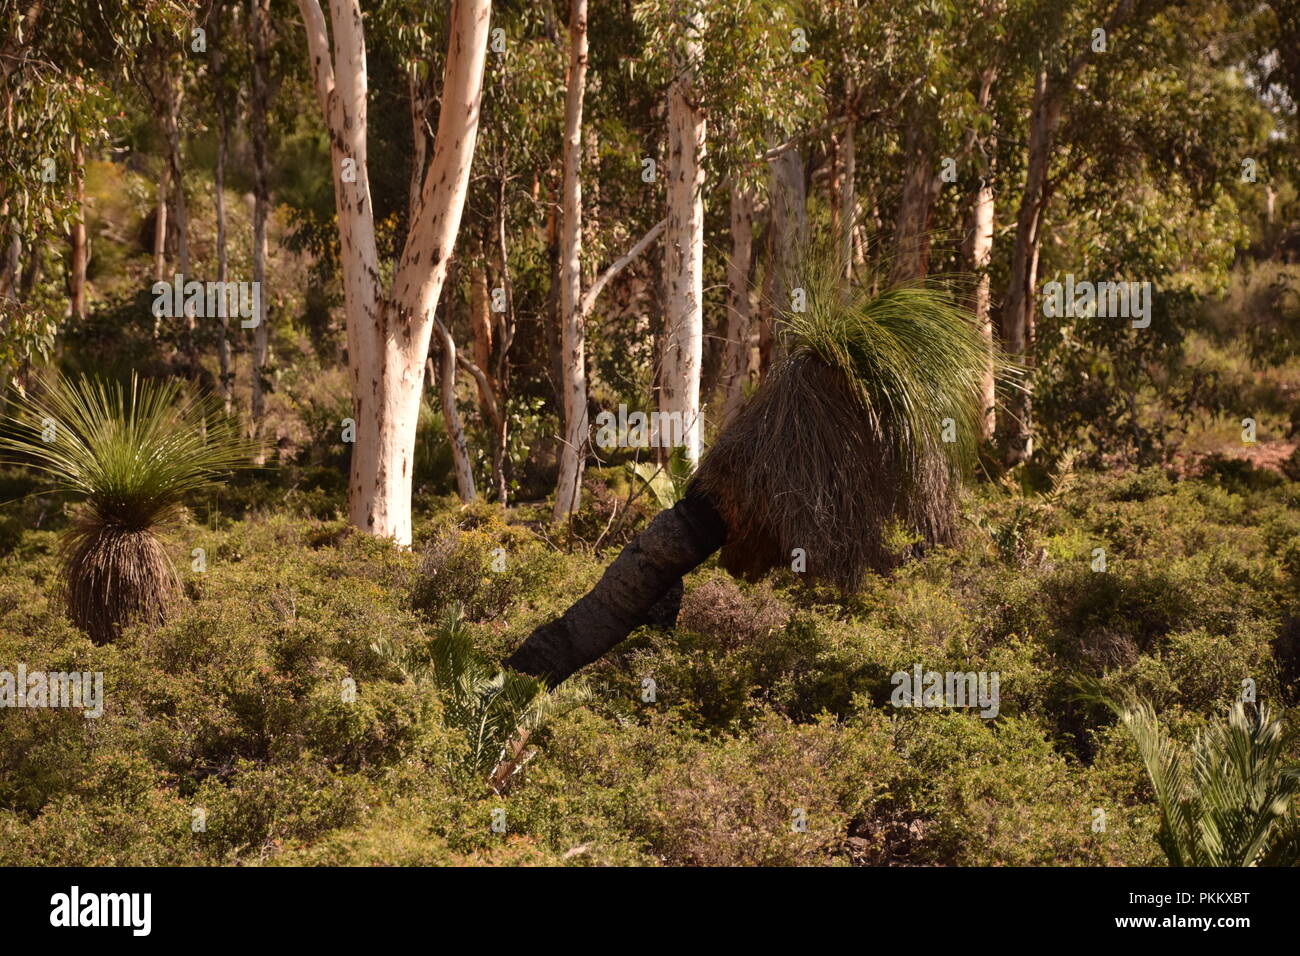 Australian native grass tree leaning over in bush Stock Photo